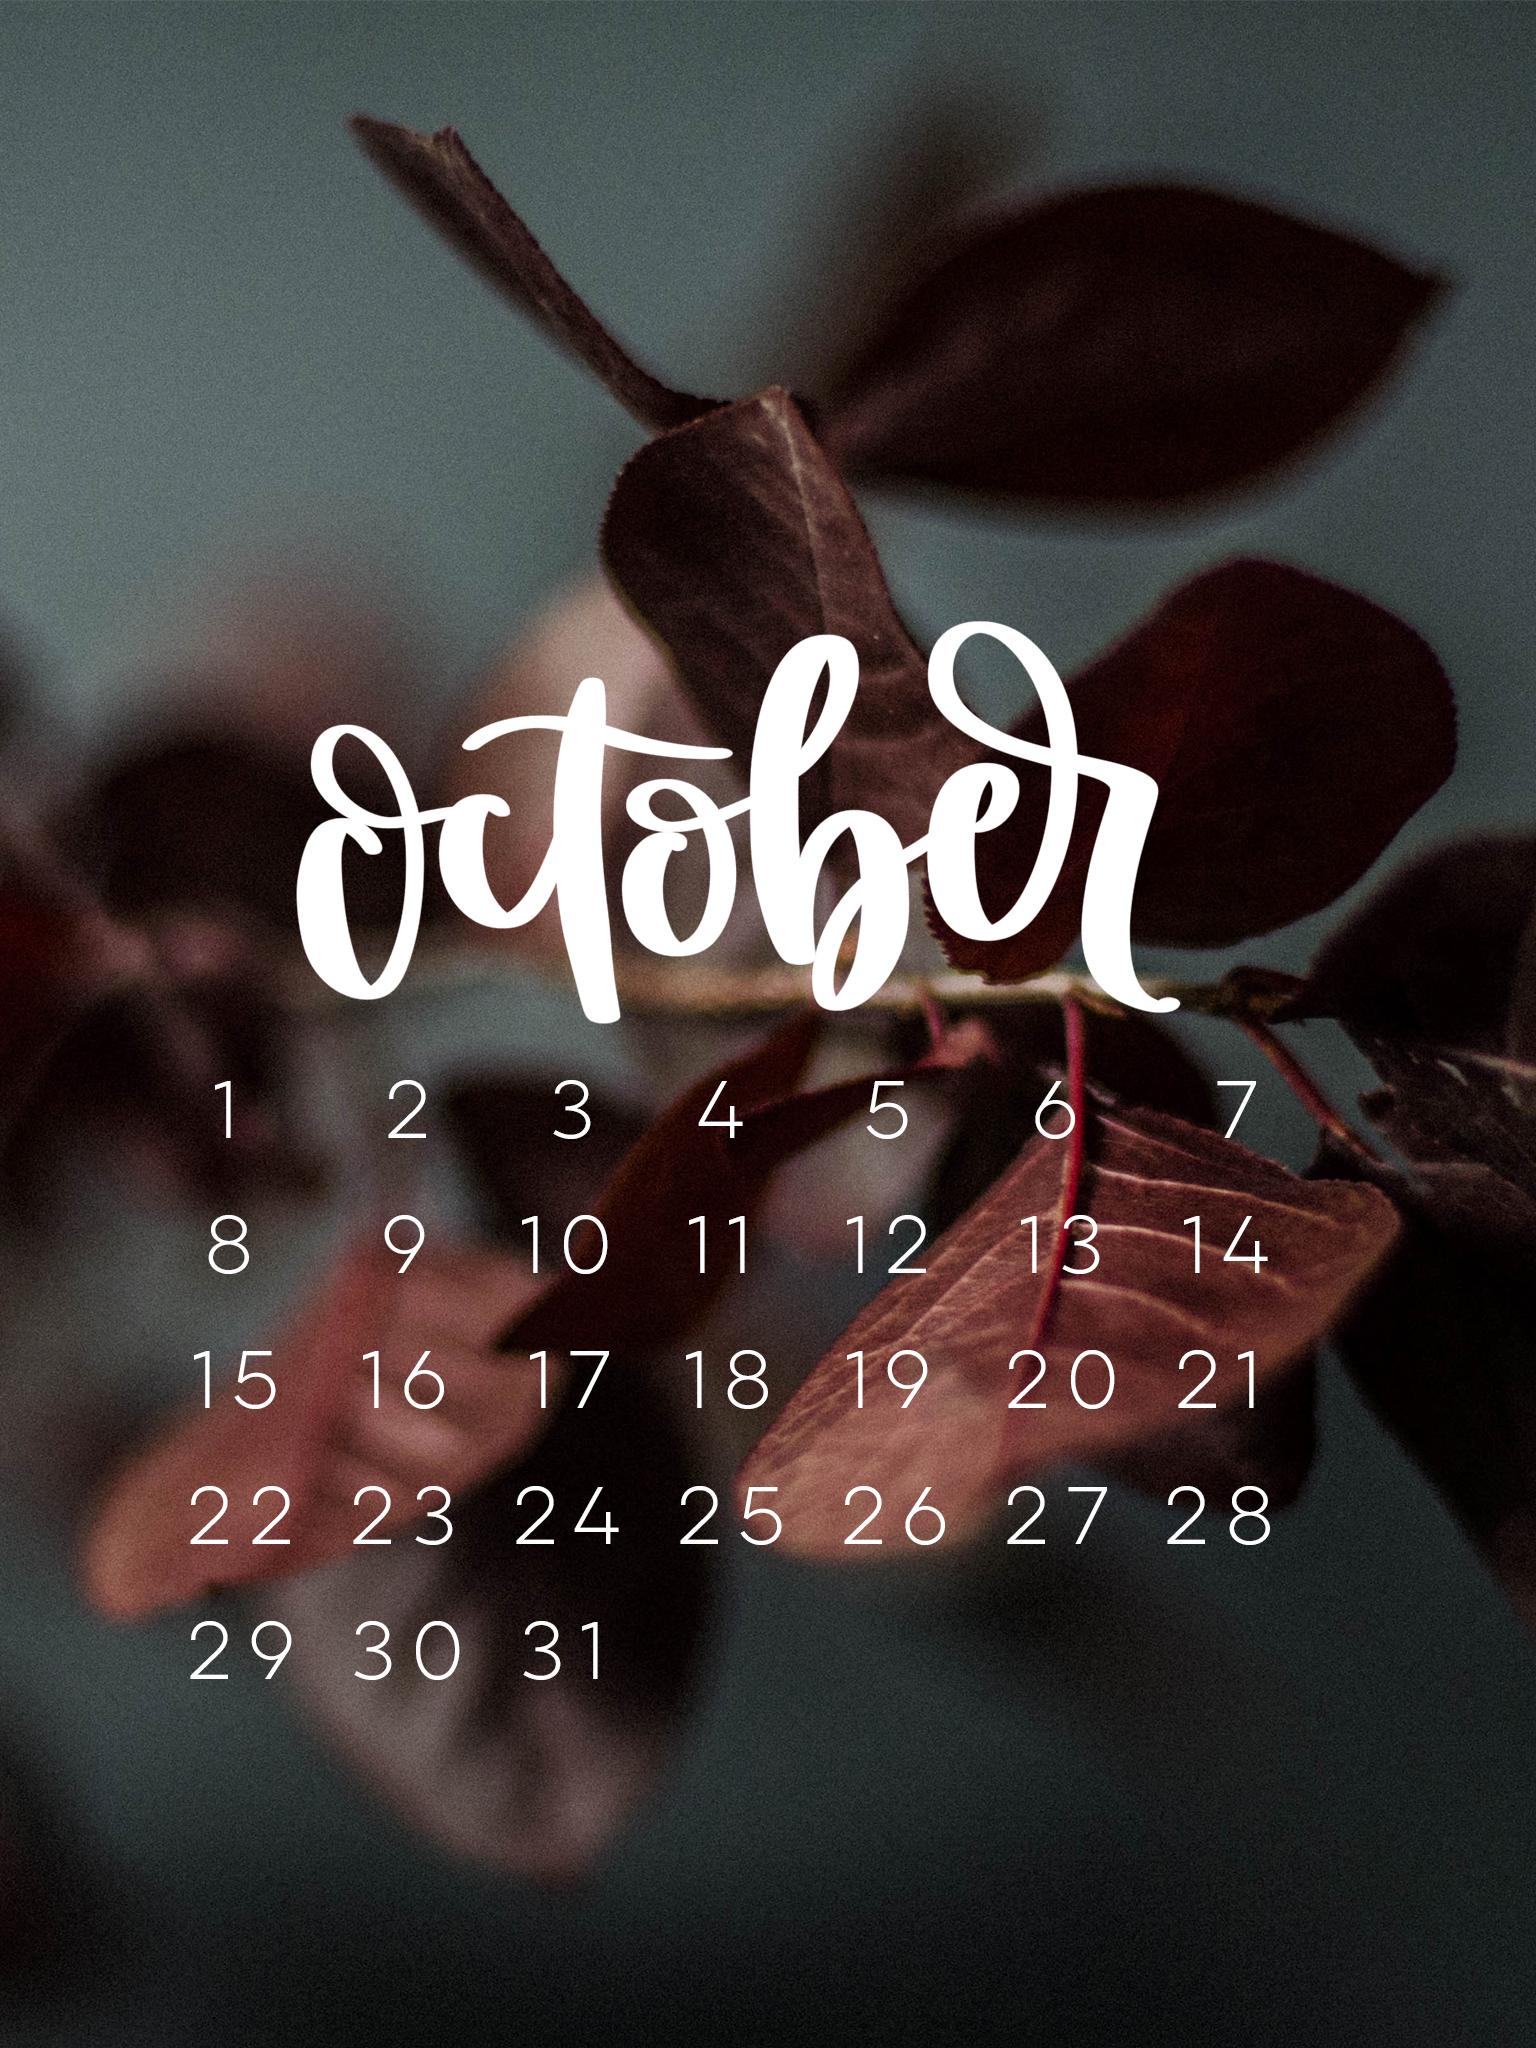 October Iphone Wallpaper - Number - HD Wallpaper 